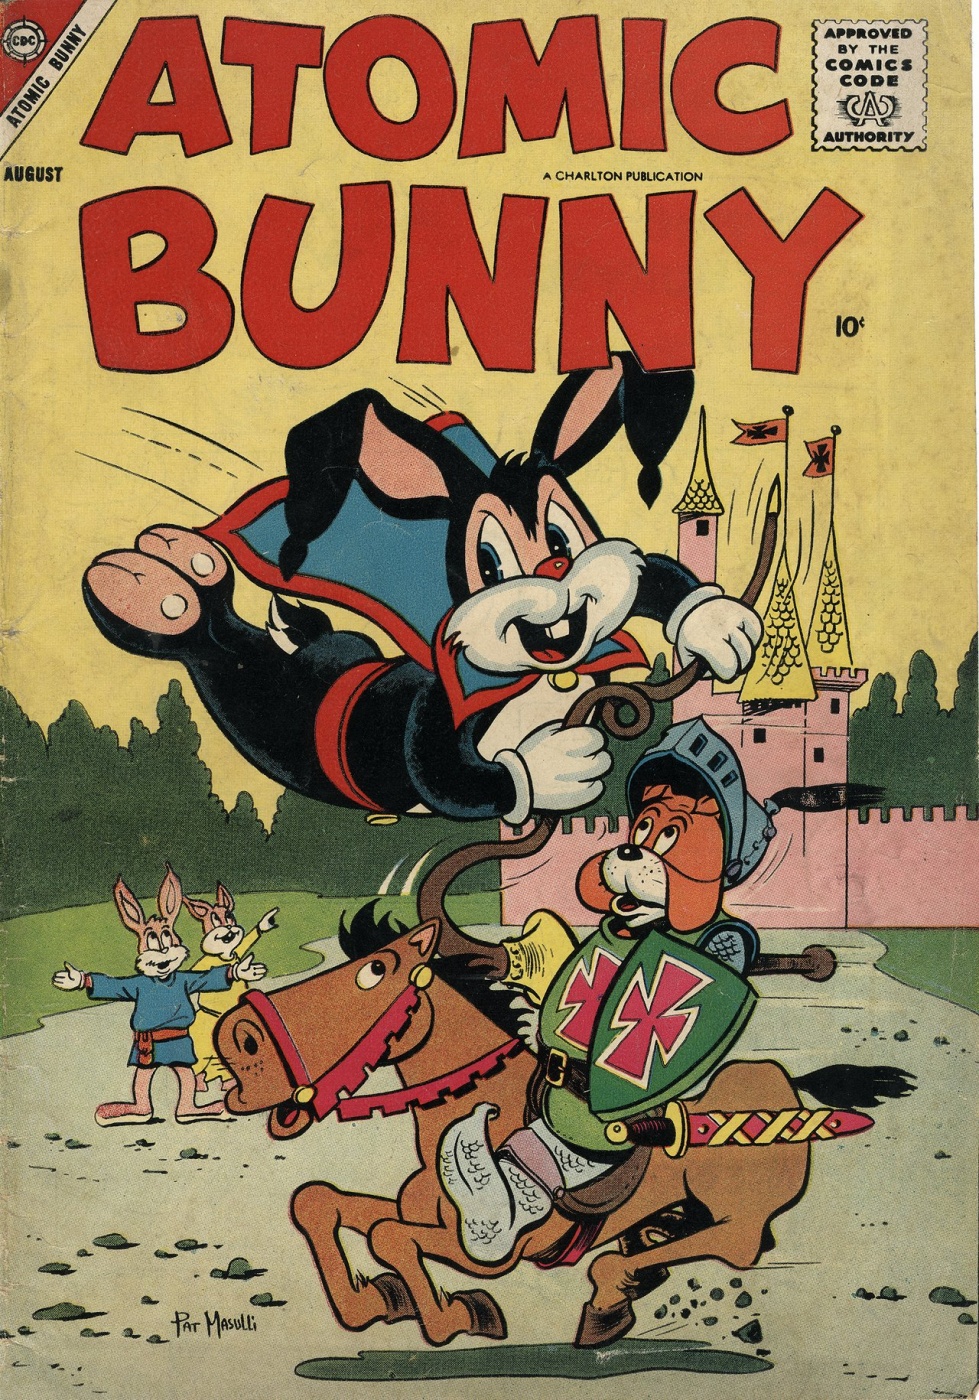 Atomic-Bunny-Comic-Strips (1)